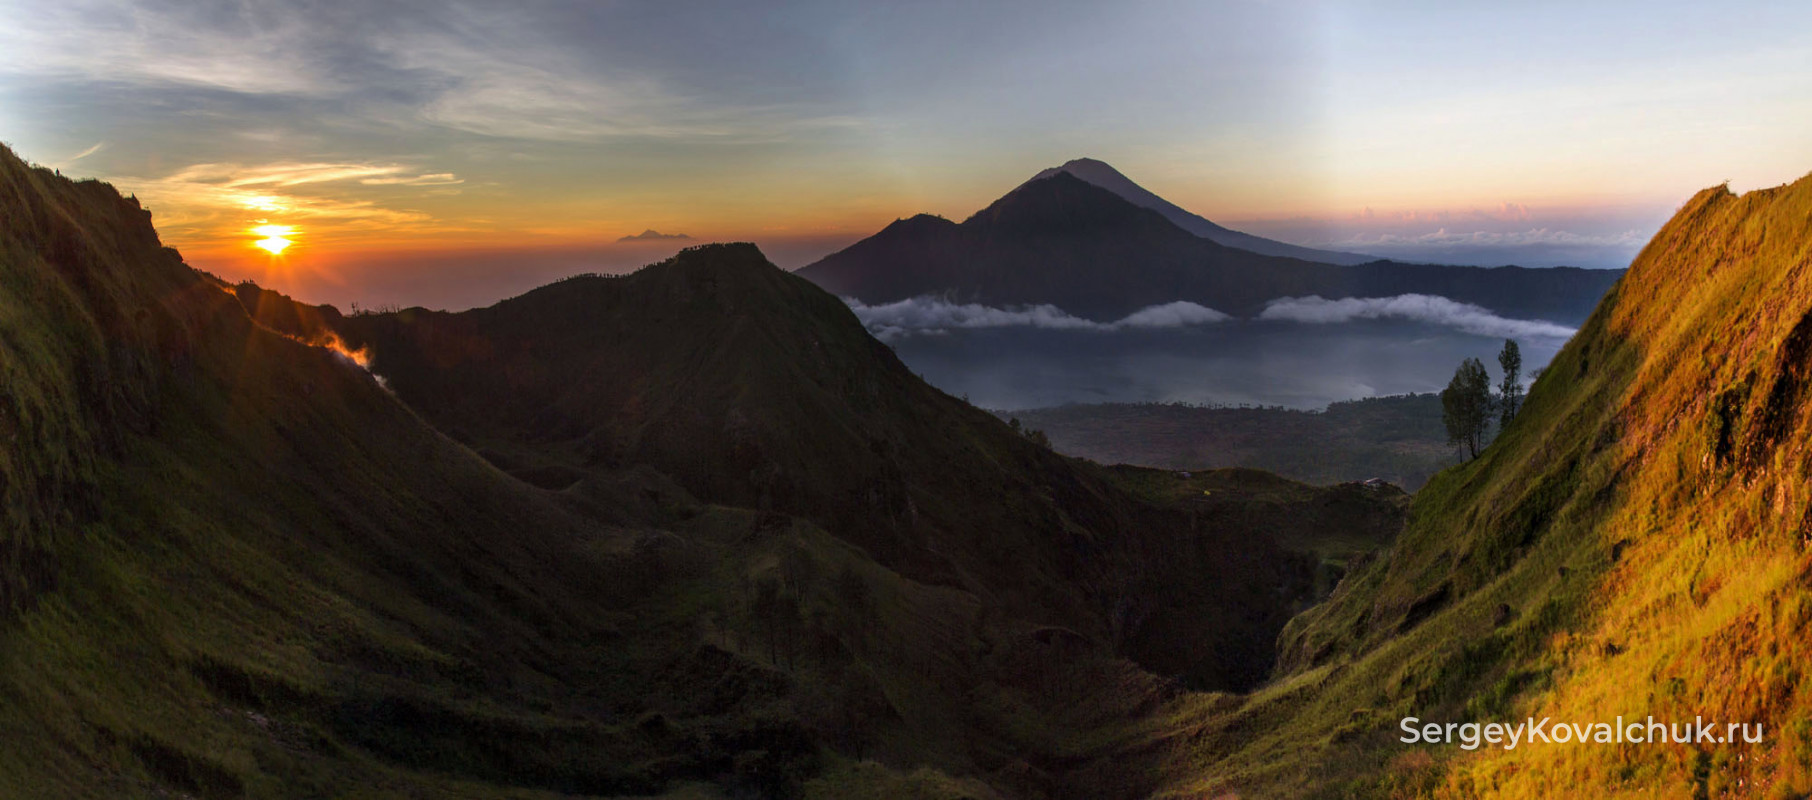 Вулкан Батур, остров Бали, Индонезия